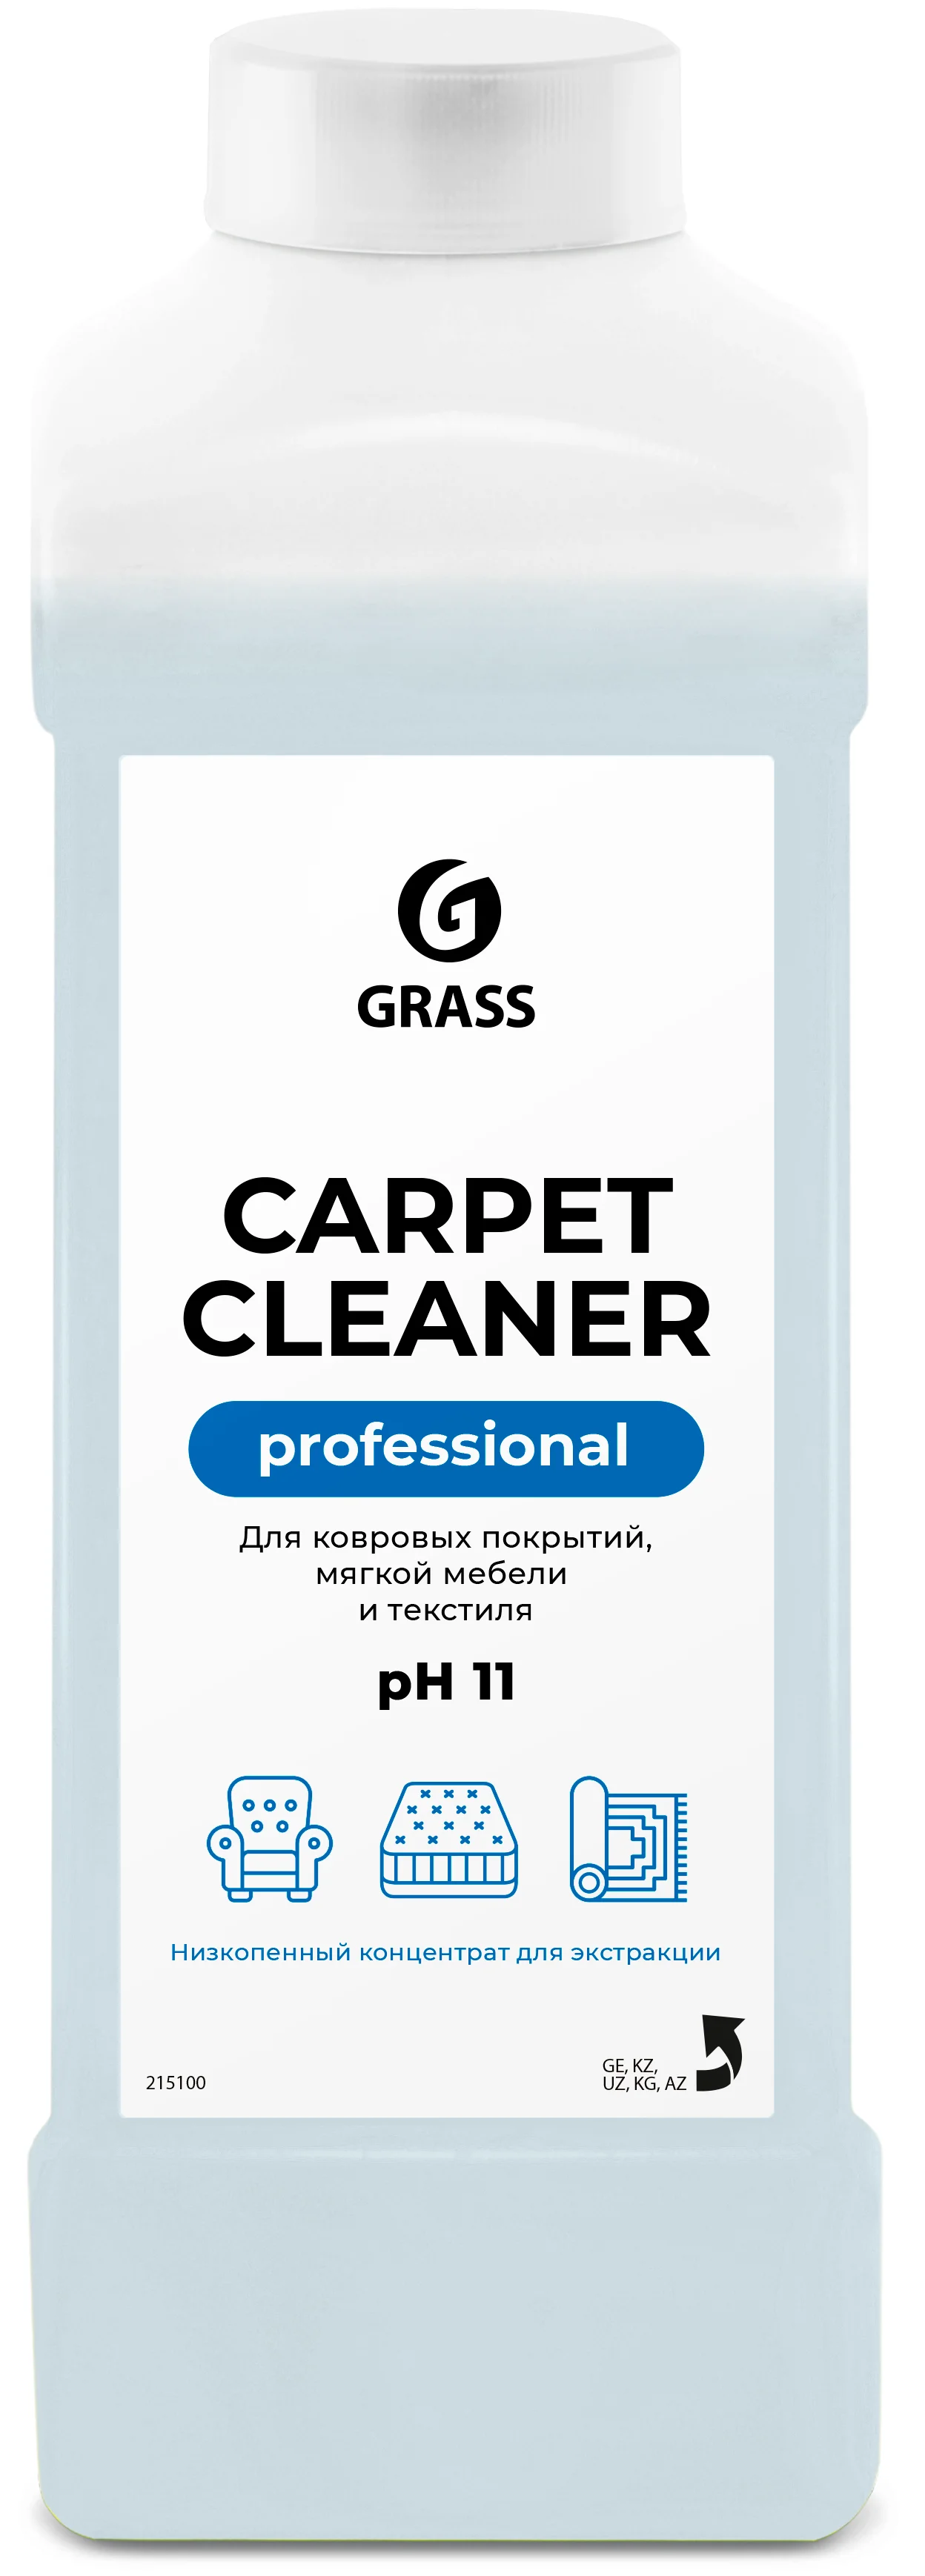 Grass Carpet cleaner